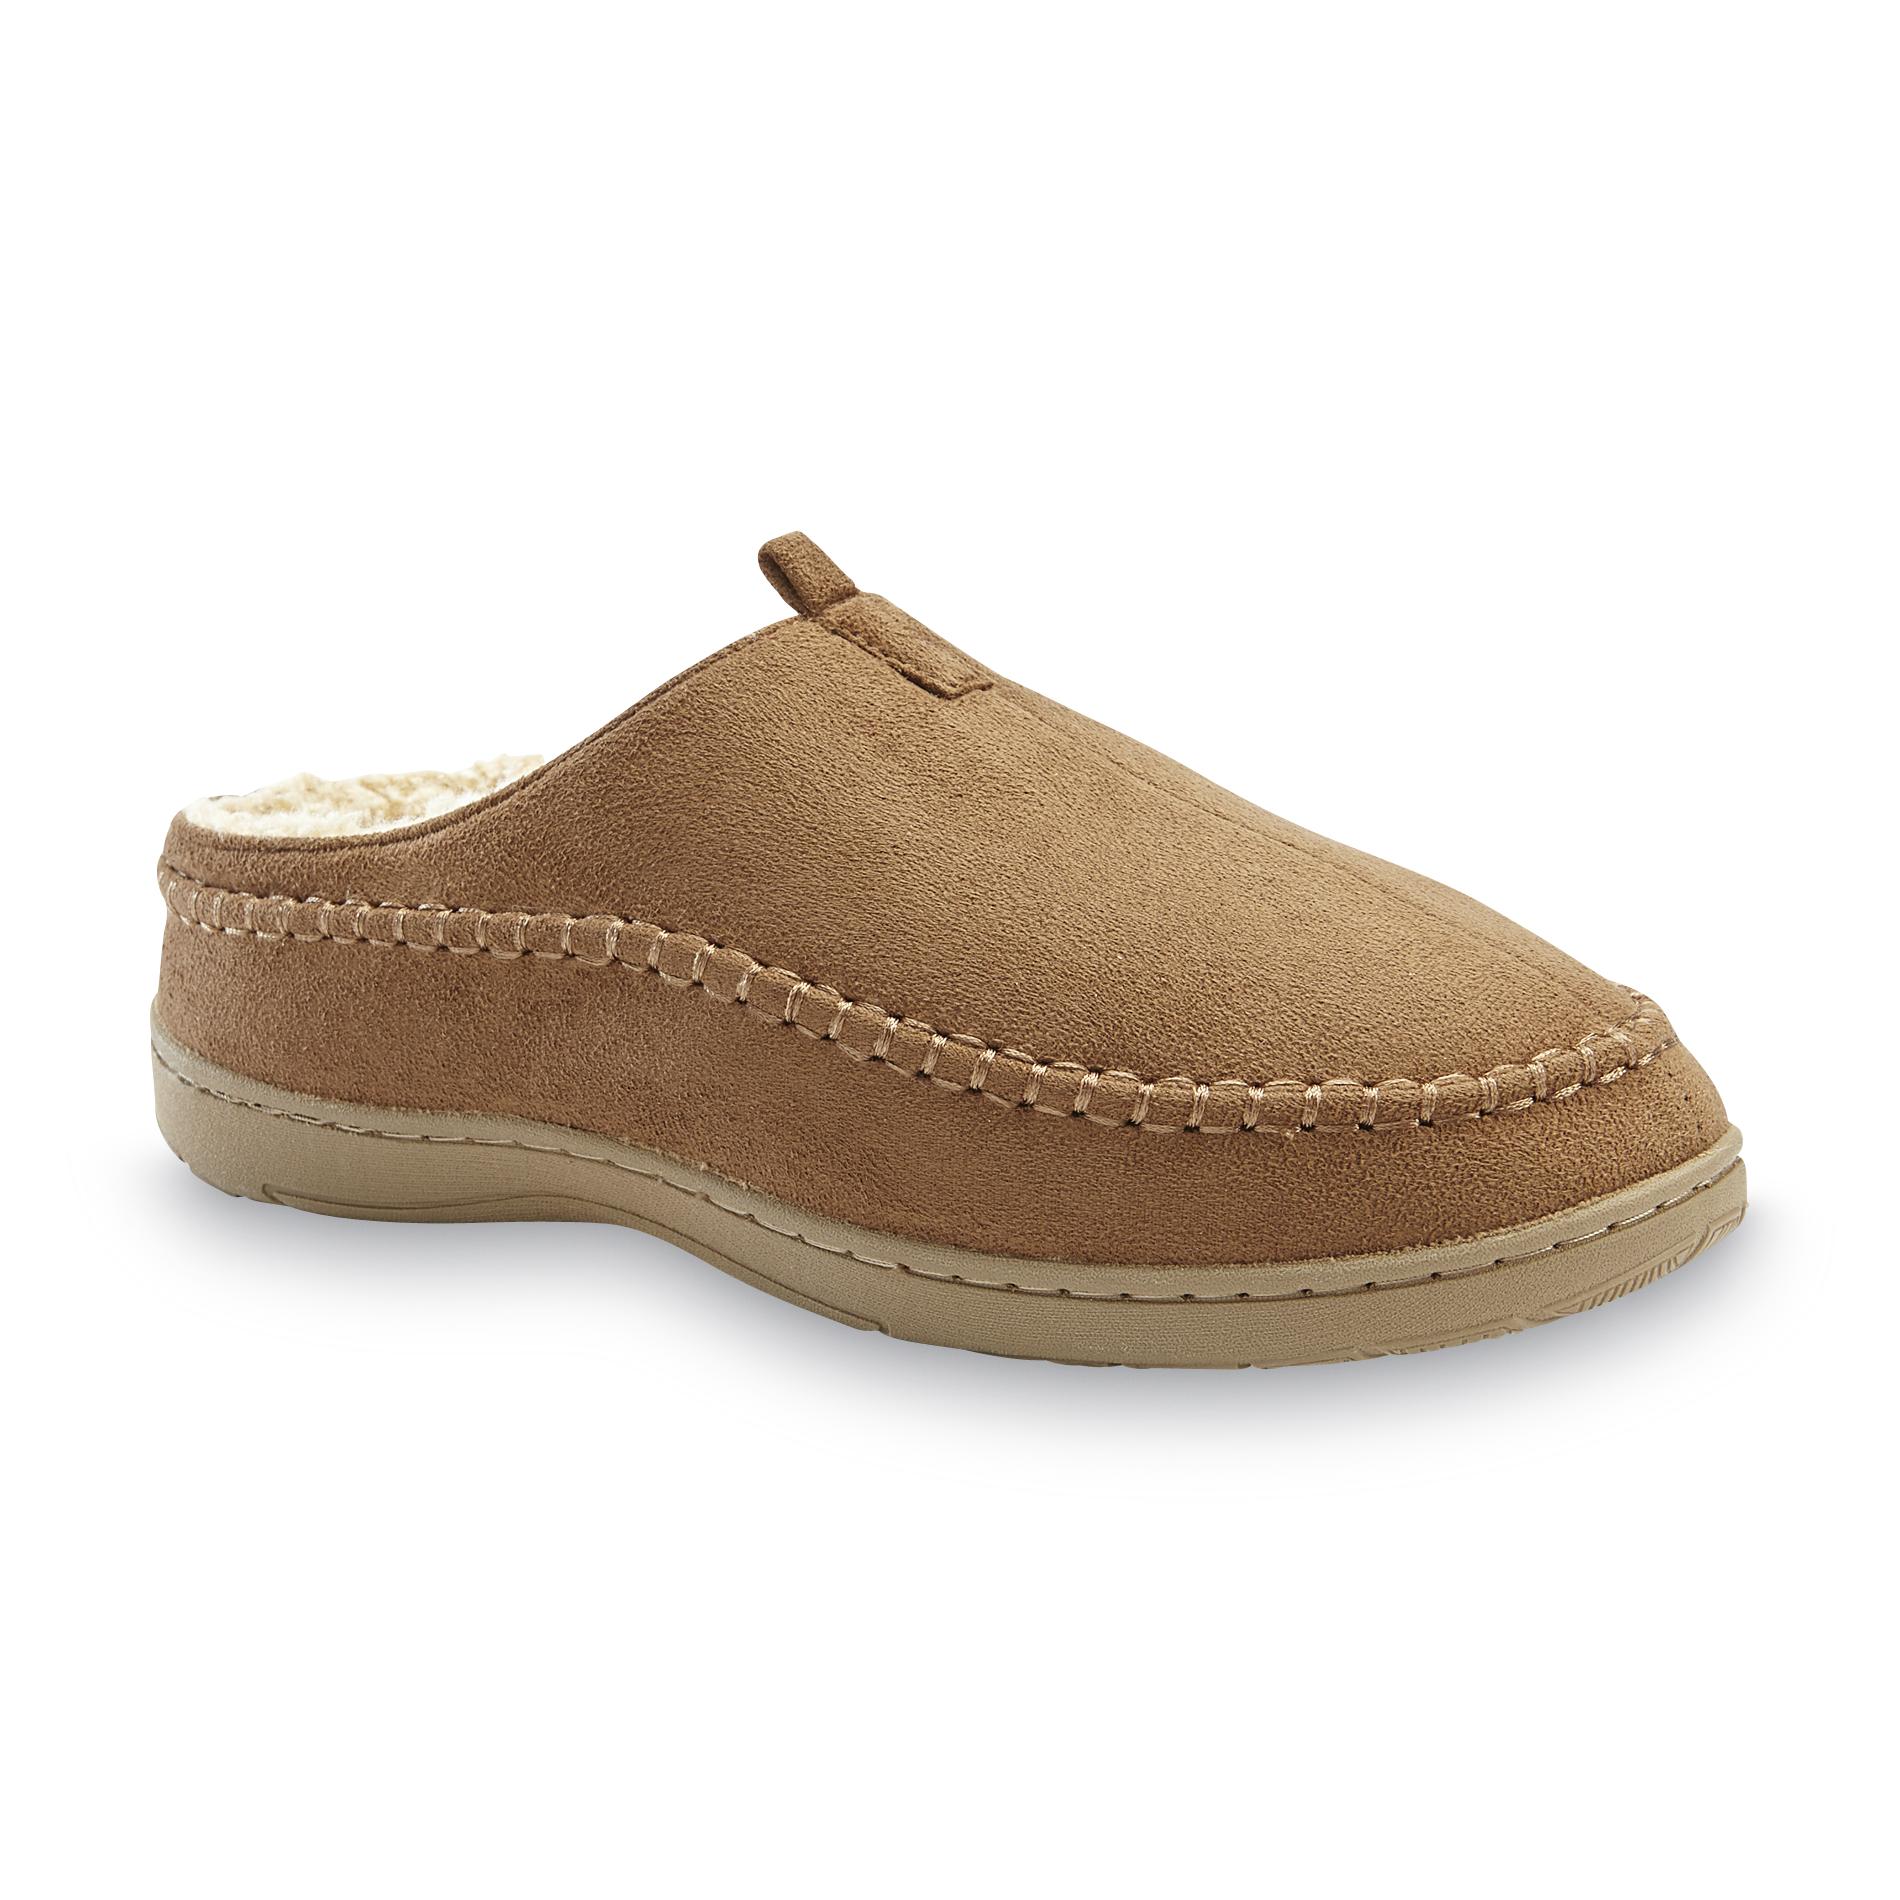 Dockers Men's Top Stitch Tan Clog Slipper - Shoes - Men's Shoes - Men's ...